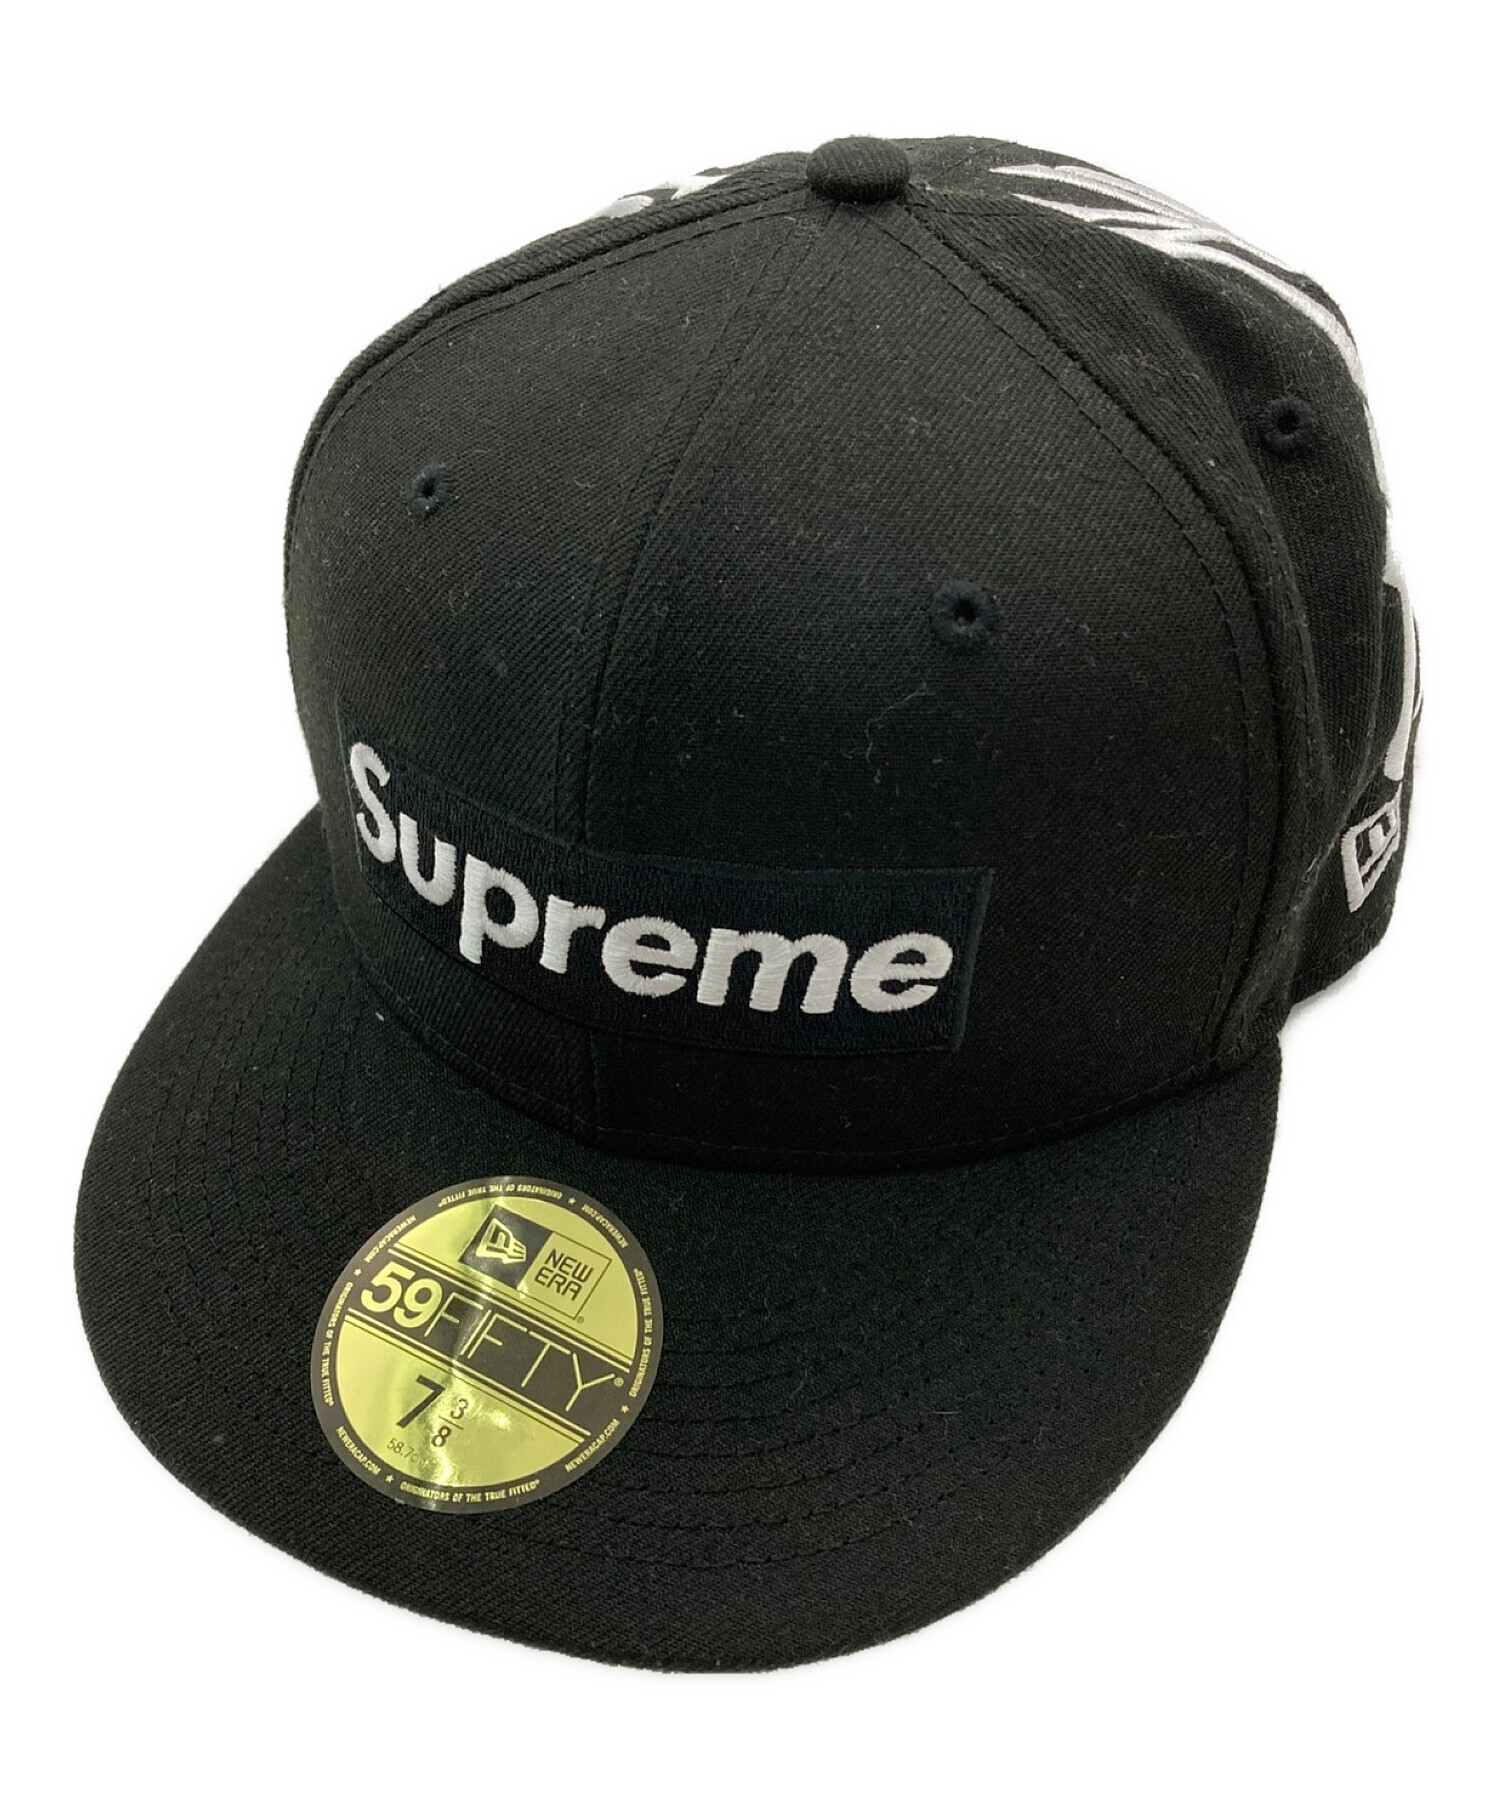 supreme new era cap 3/8 - キャップ